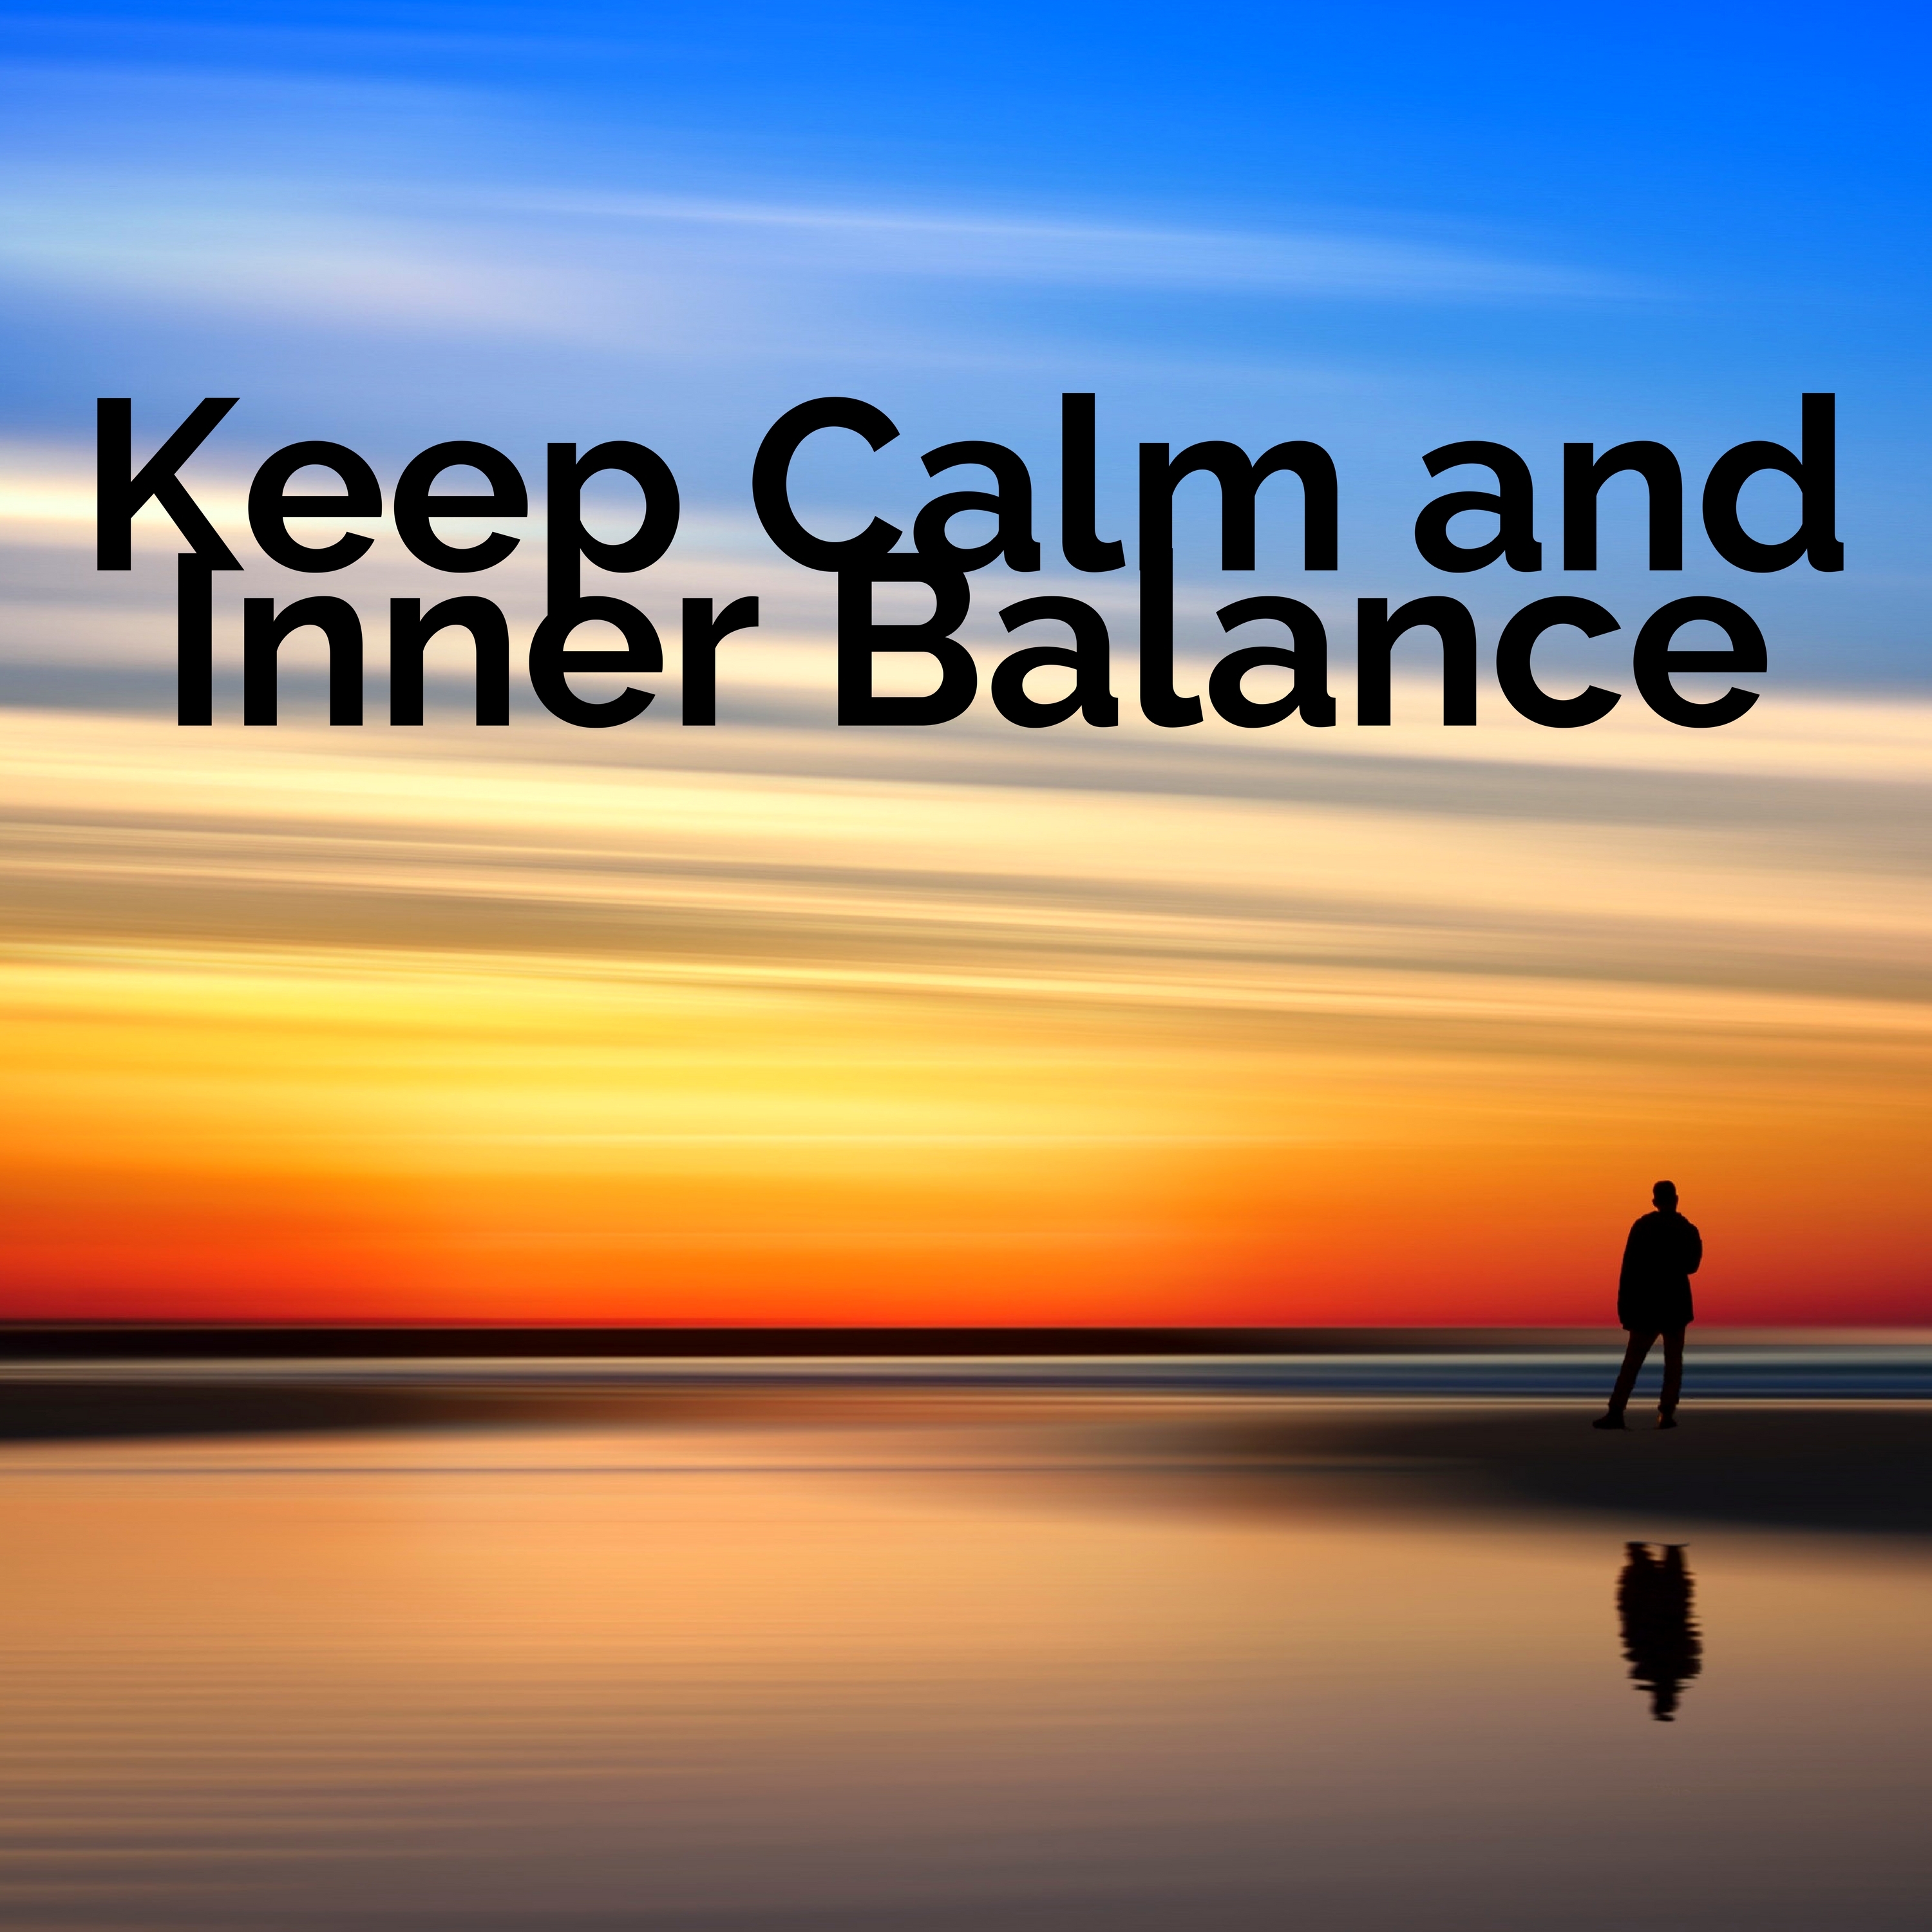 Keep Calm and Inner Balance